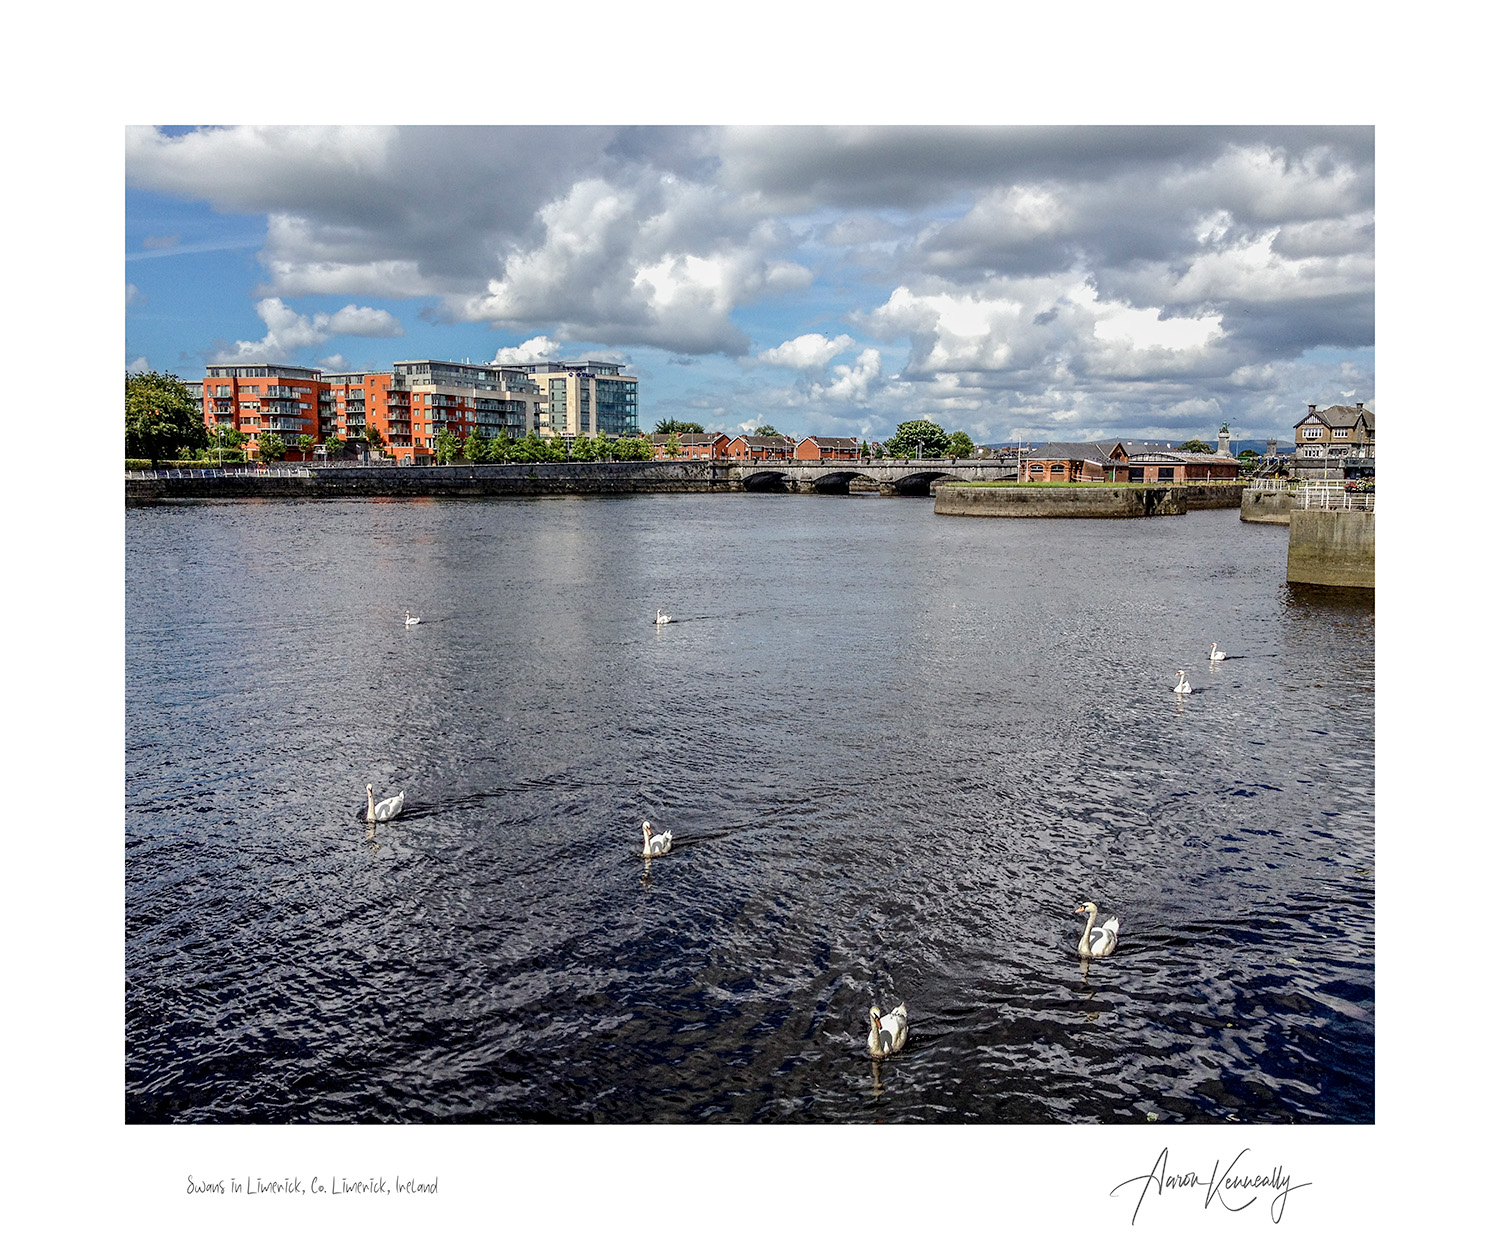 Swans of Limerick